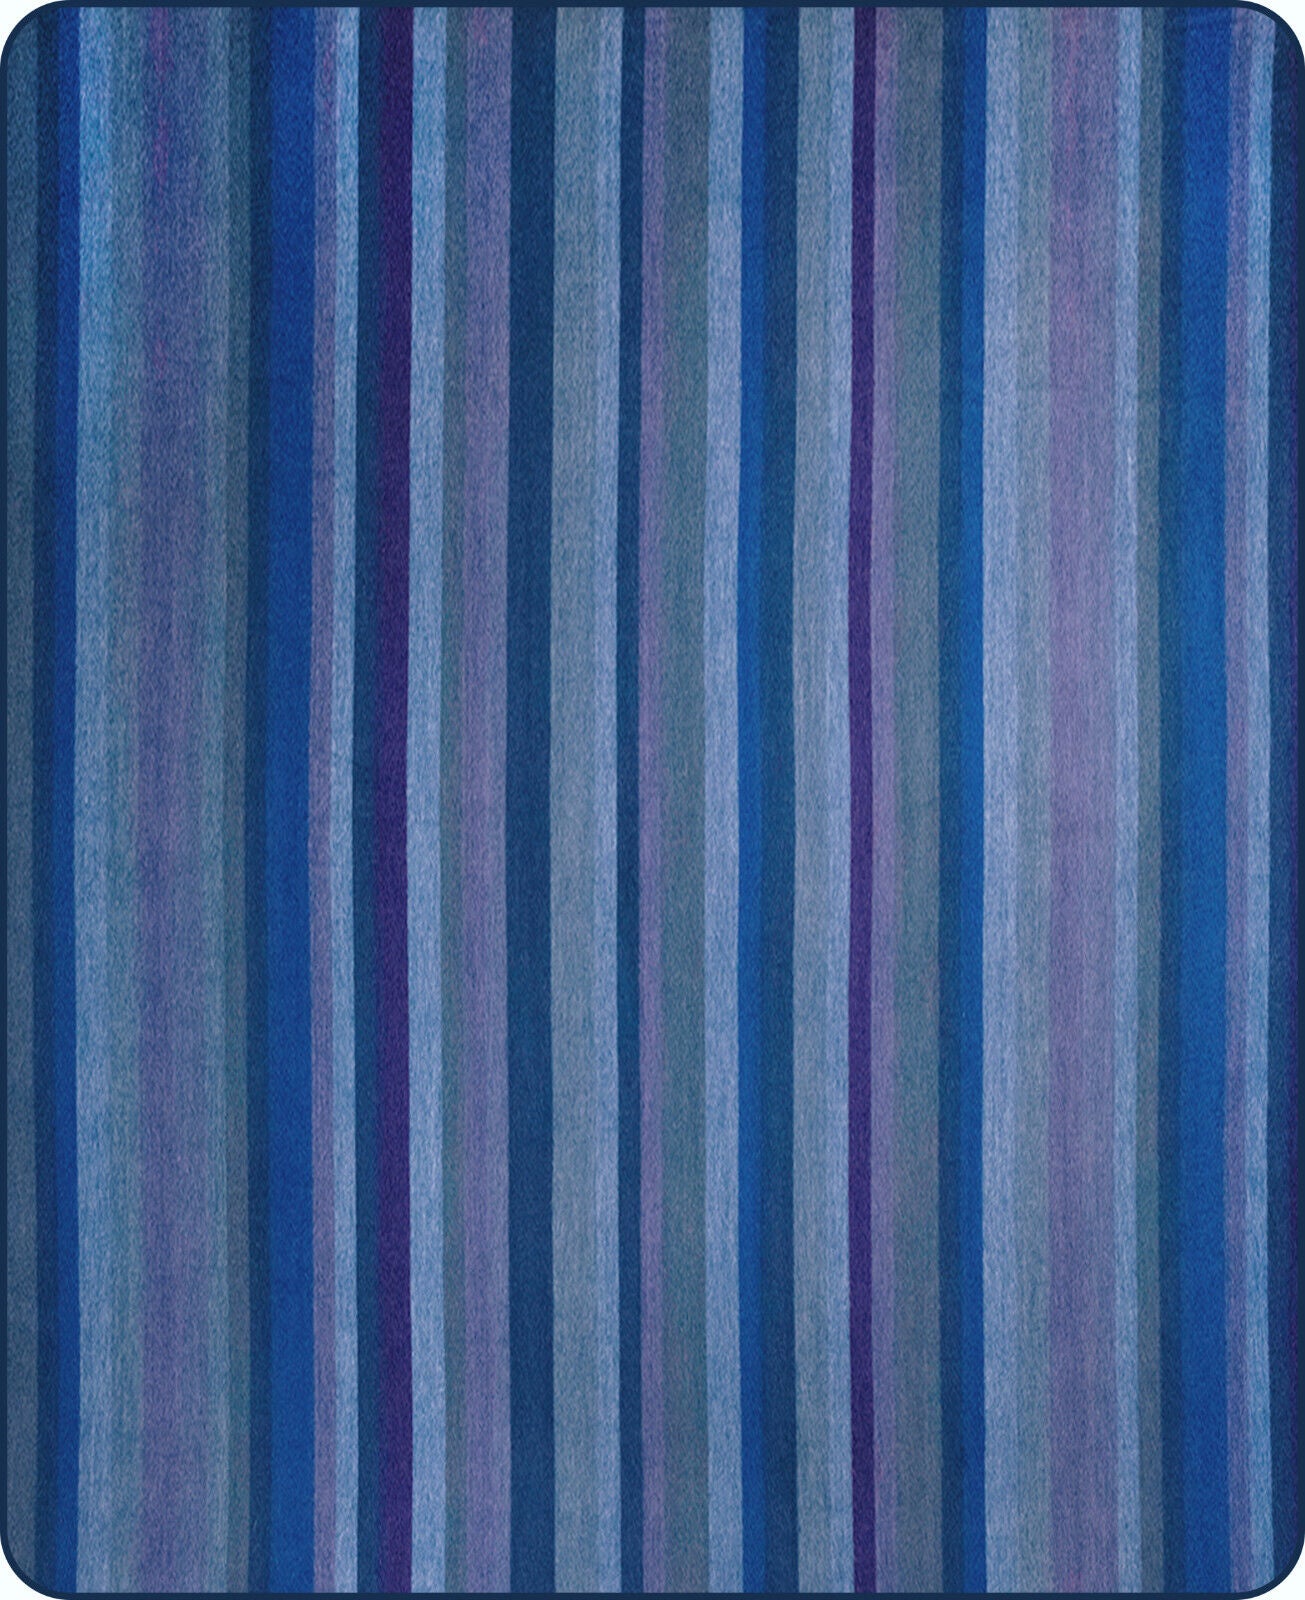 Morona - Baby Alpaca Wool Throw Blanket / Sofa Cover - Queen 96 x 68 in - Oceanic Blues - Varied Blue Tones